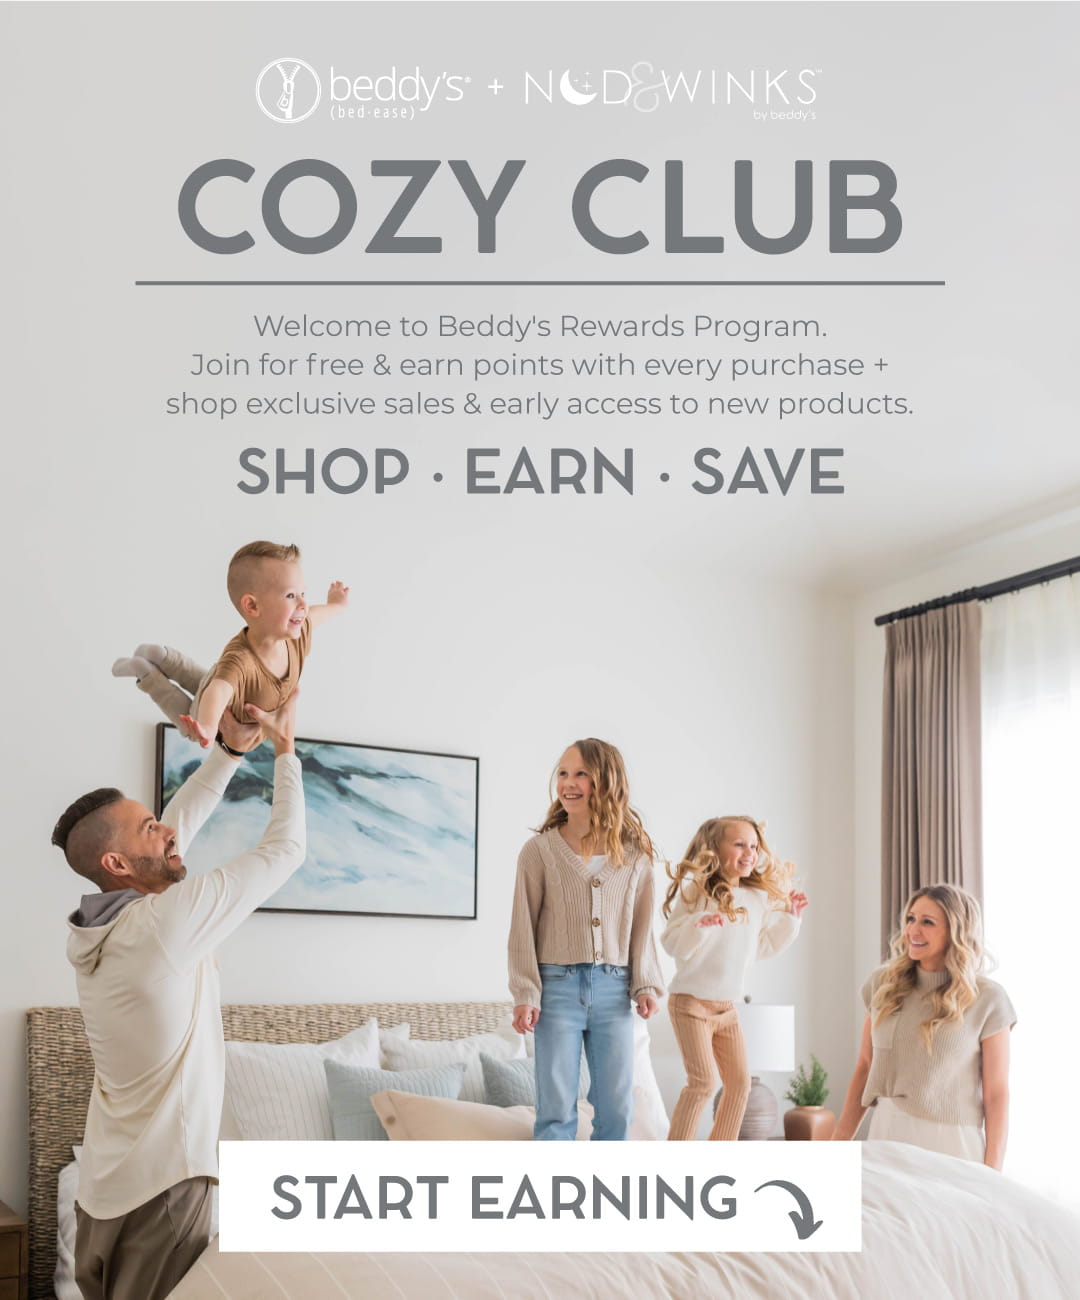 Beddy's cozy club rewards